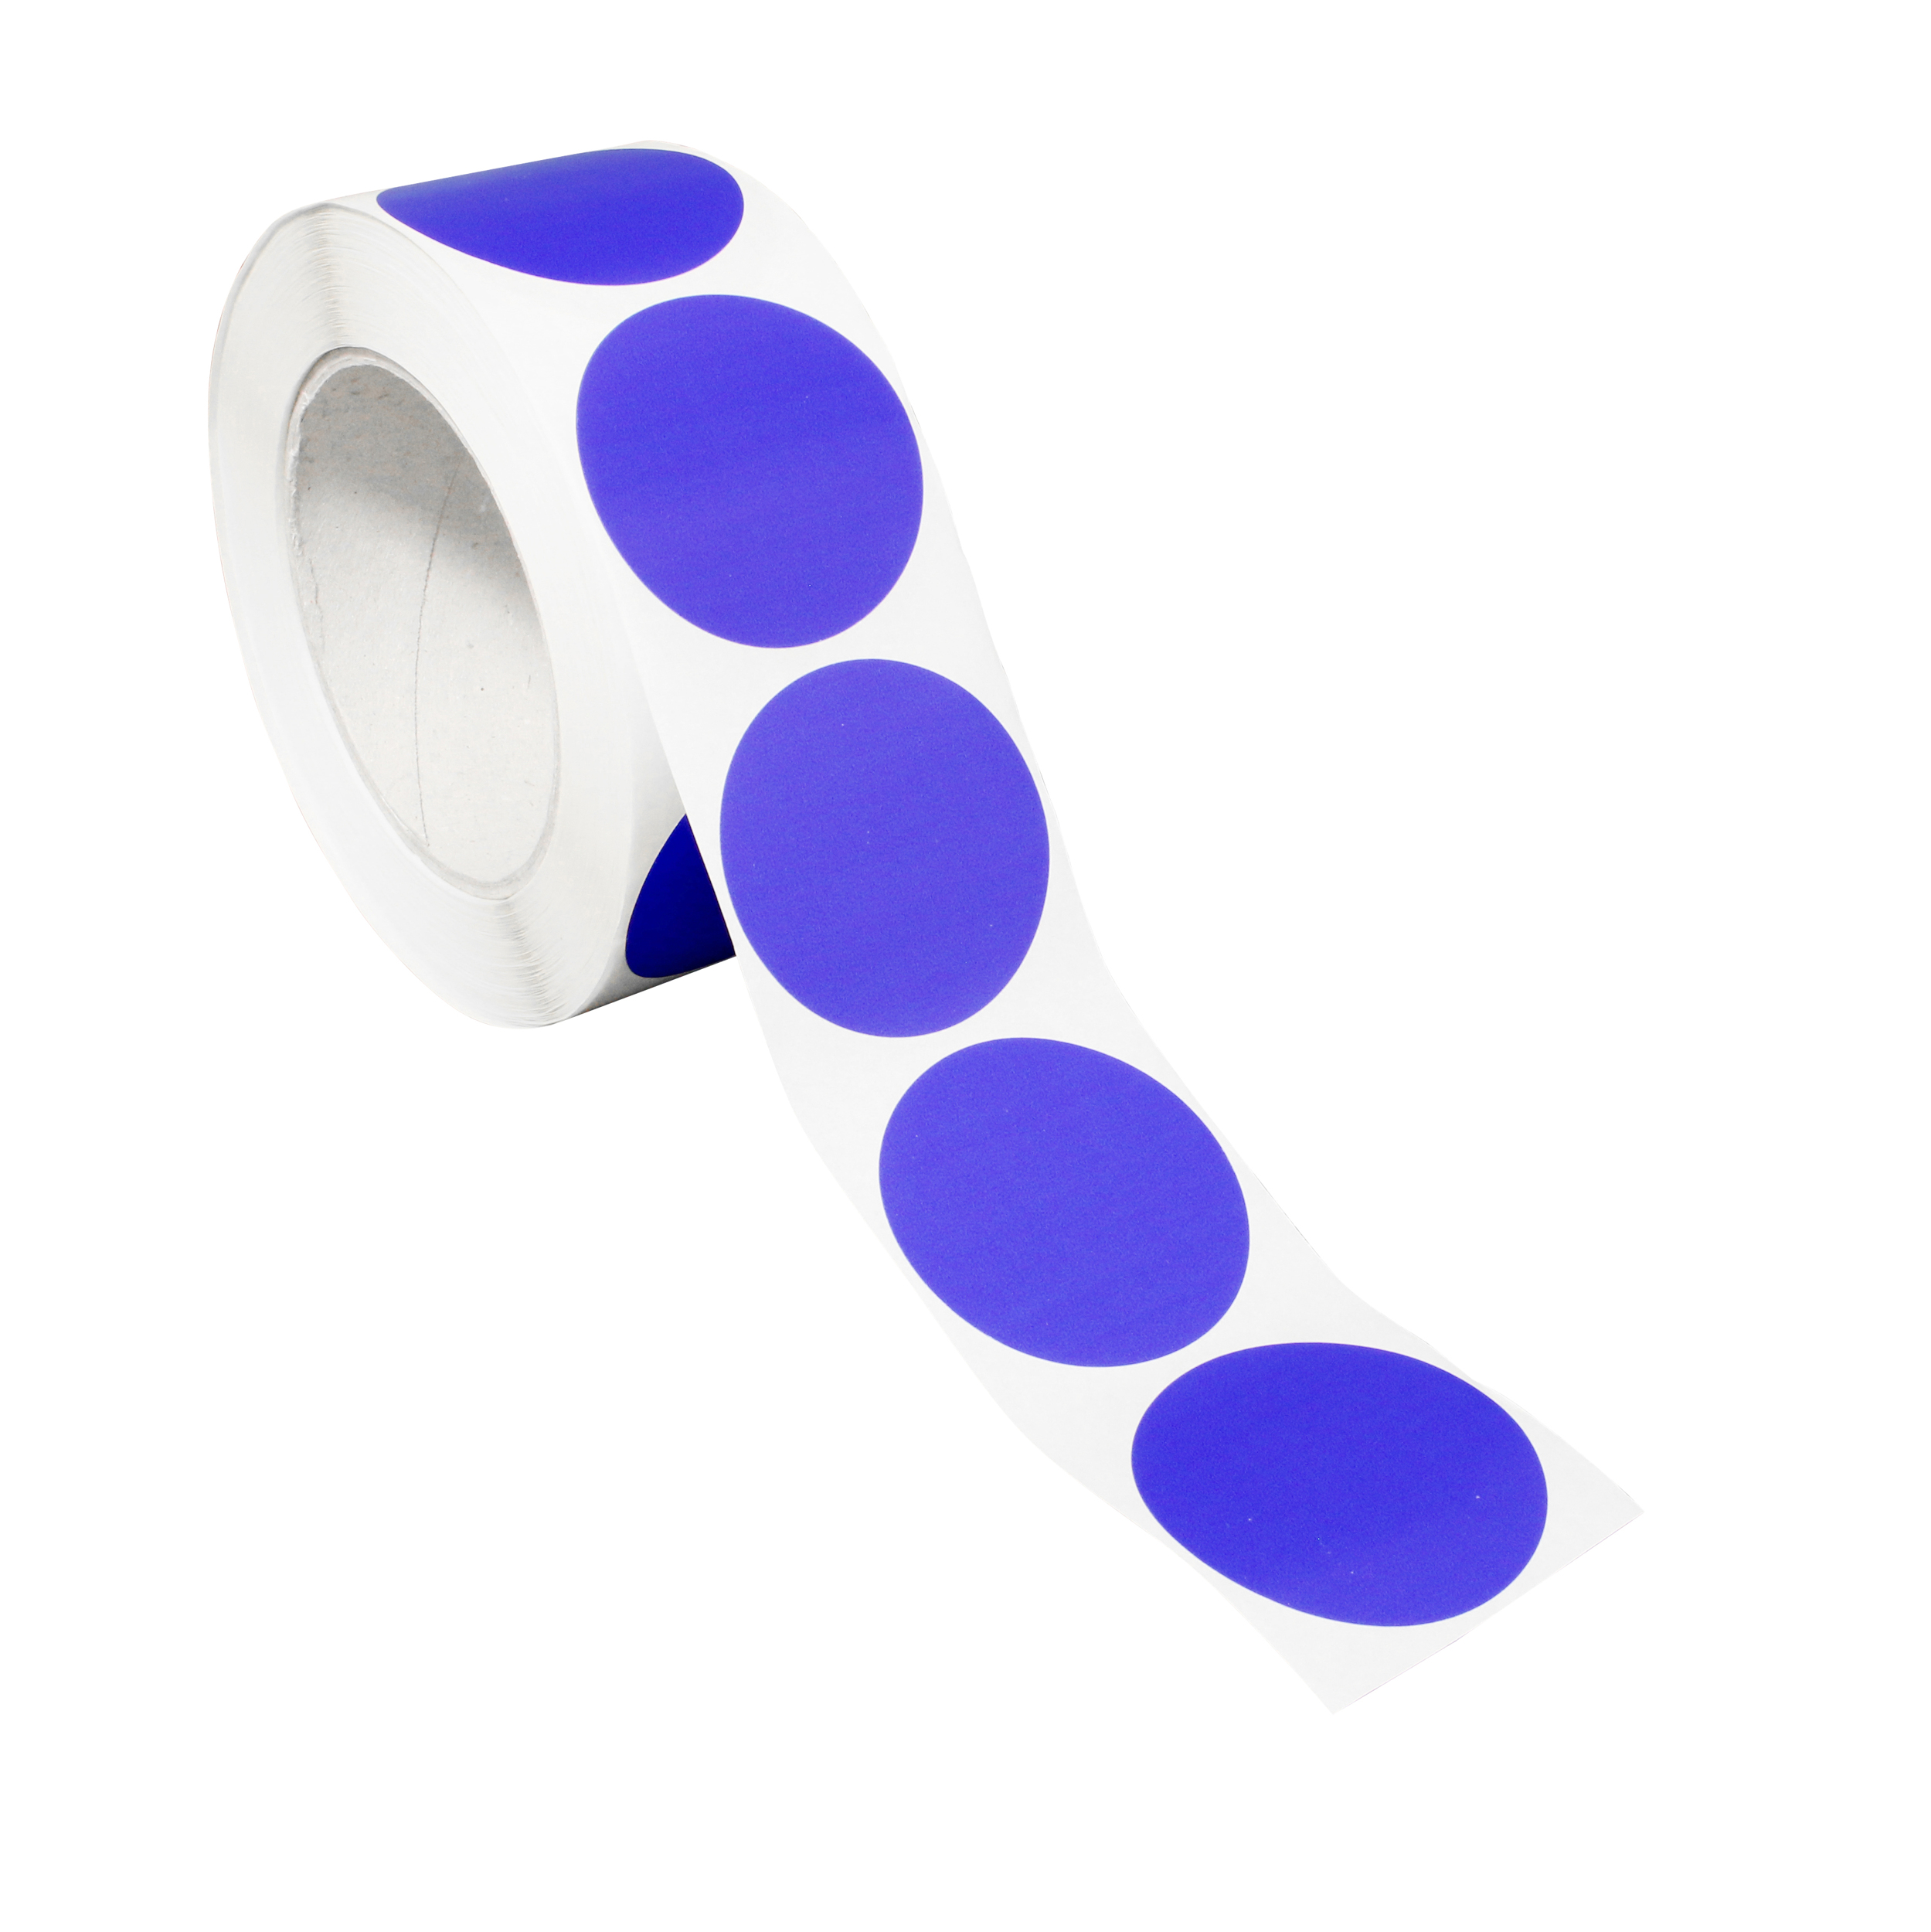 blu scuro, 40 mm Bollini adesivi colorati in carta